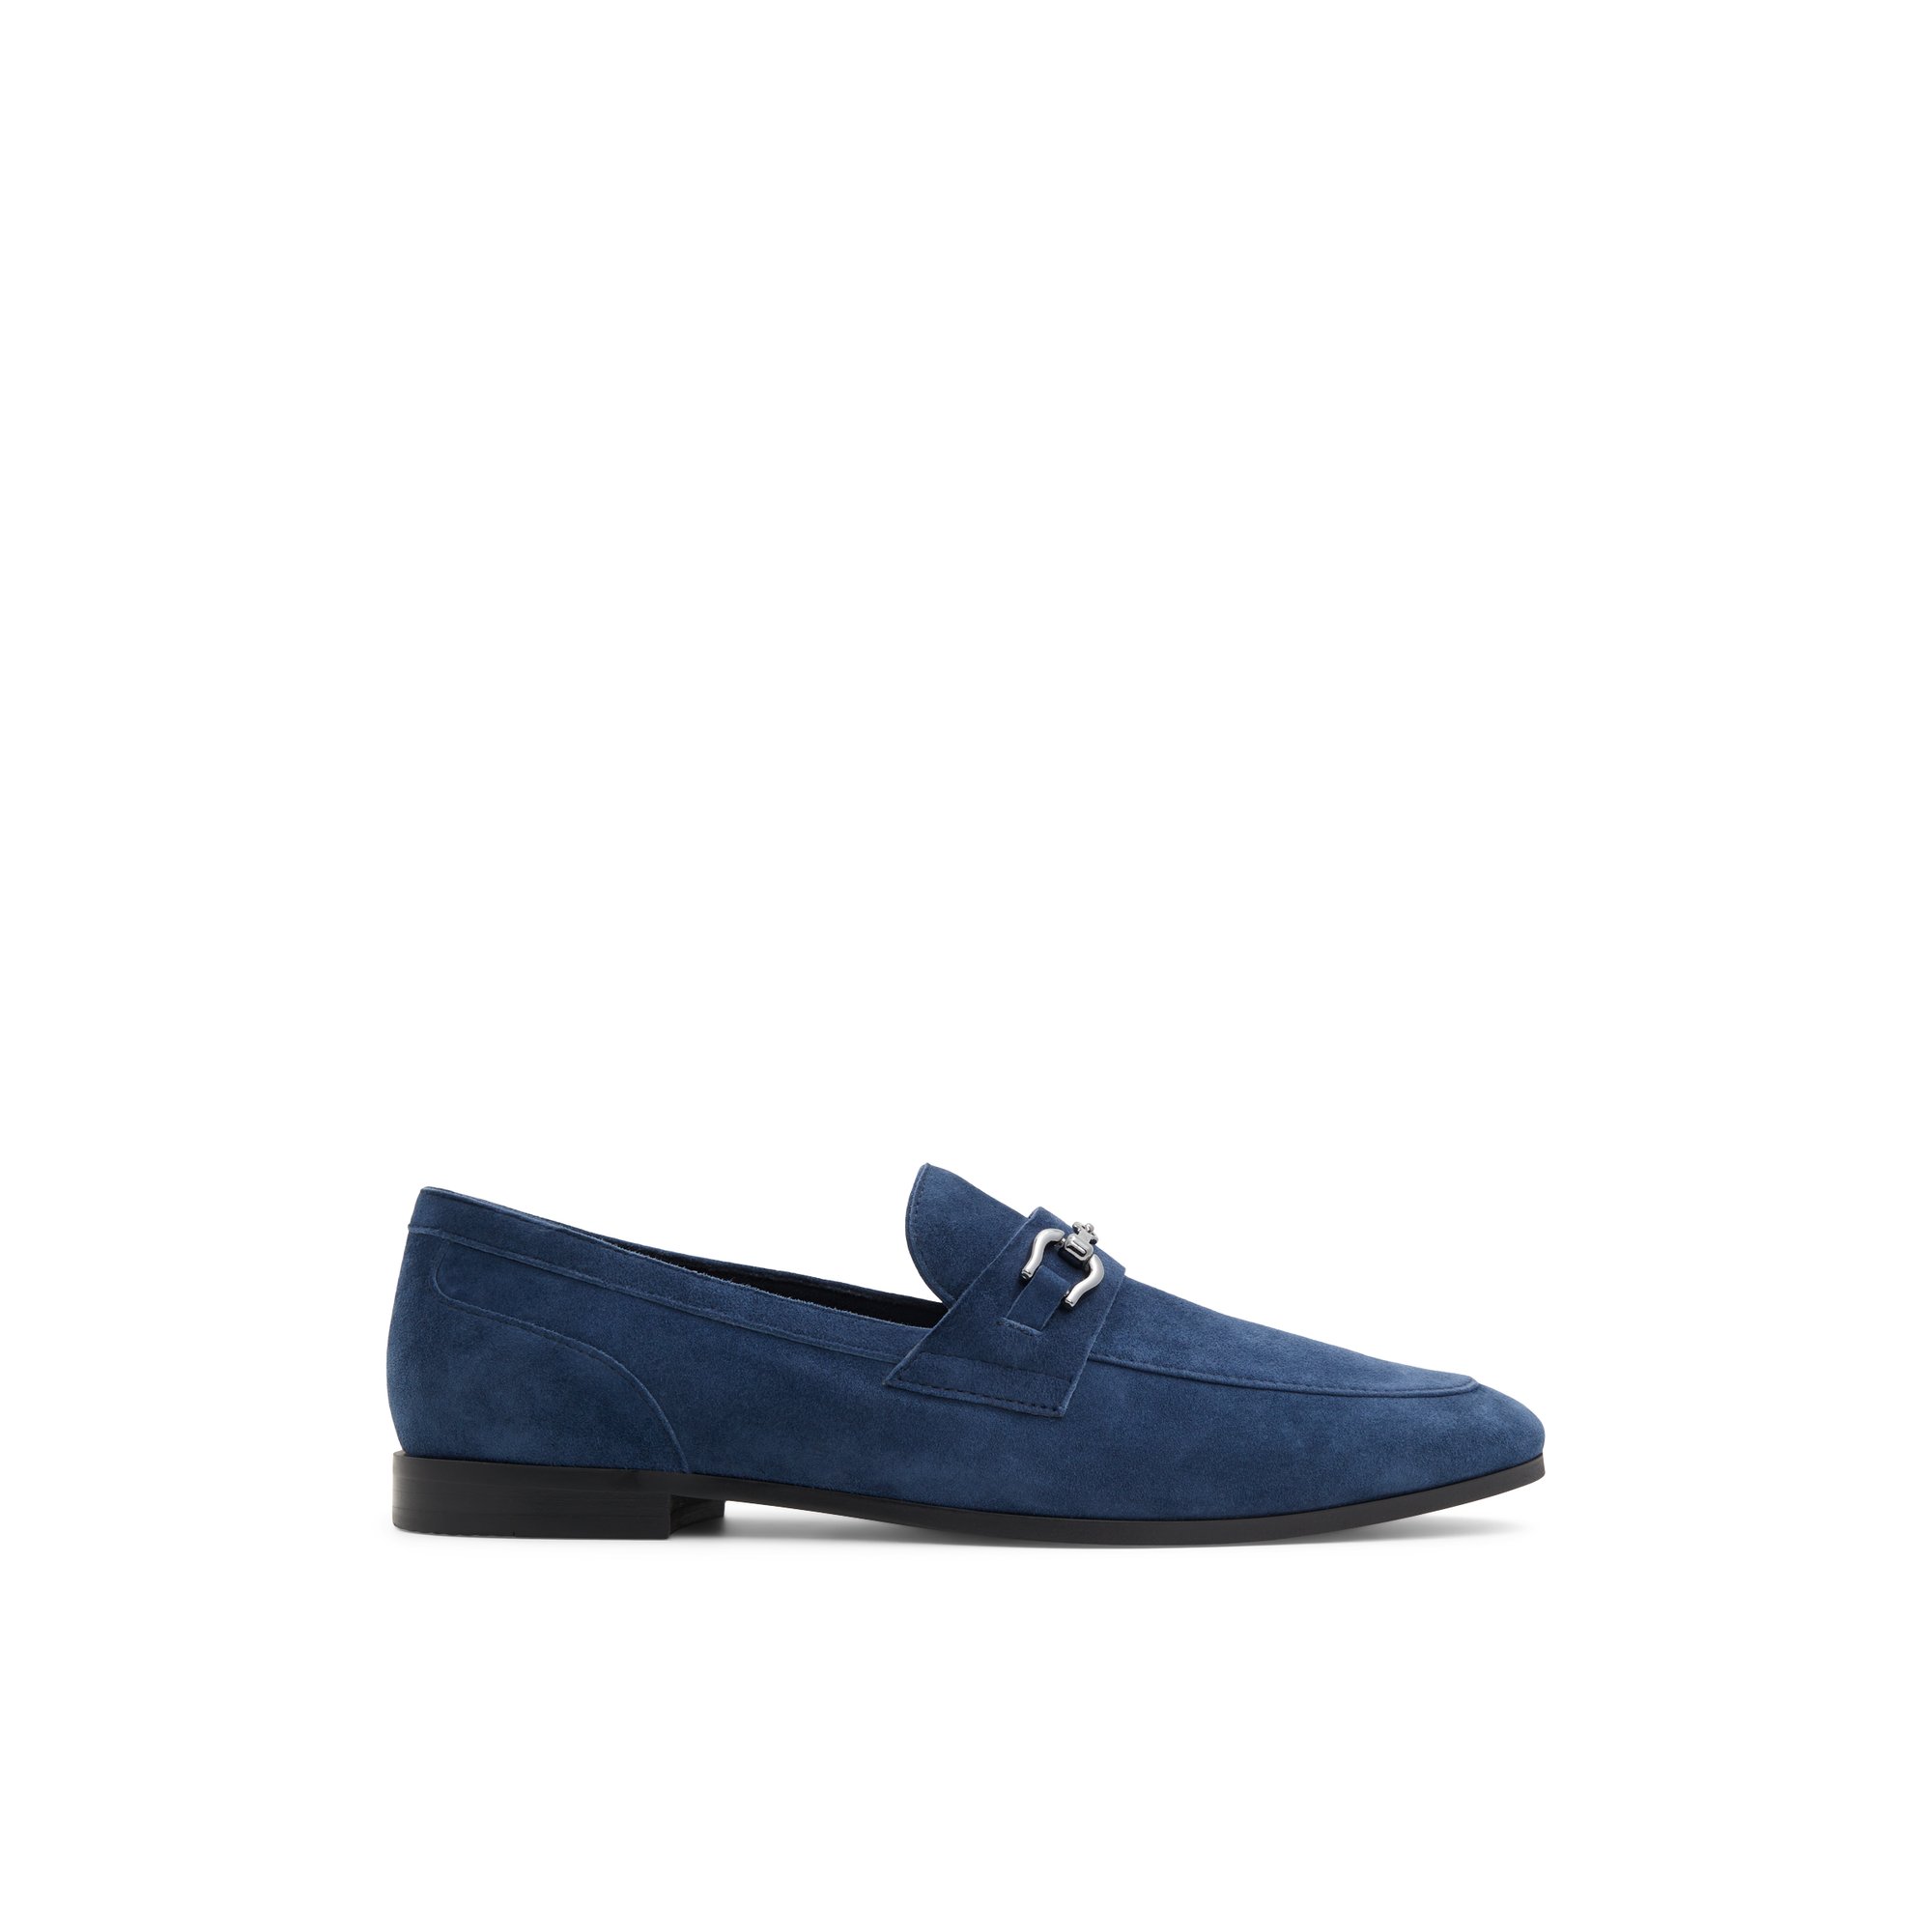 ALDO Marinho - Men's Loafers and Slip Ons - Blue